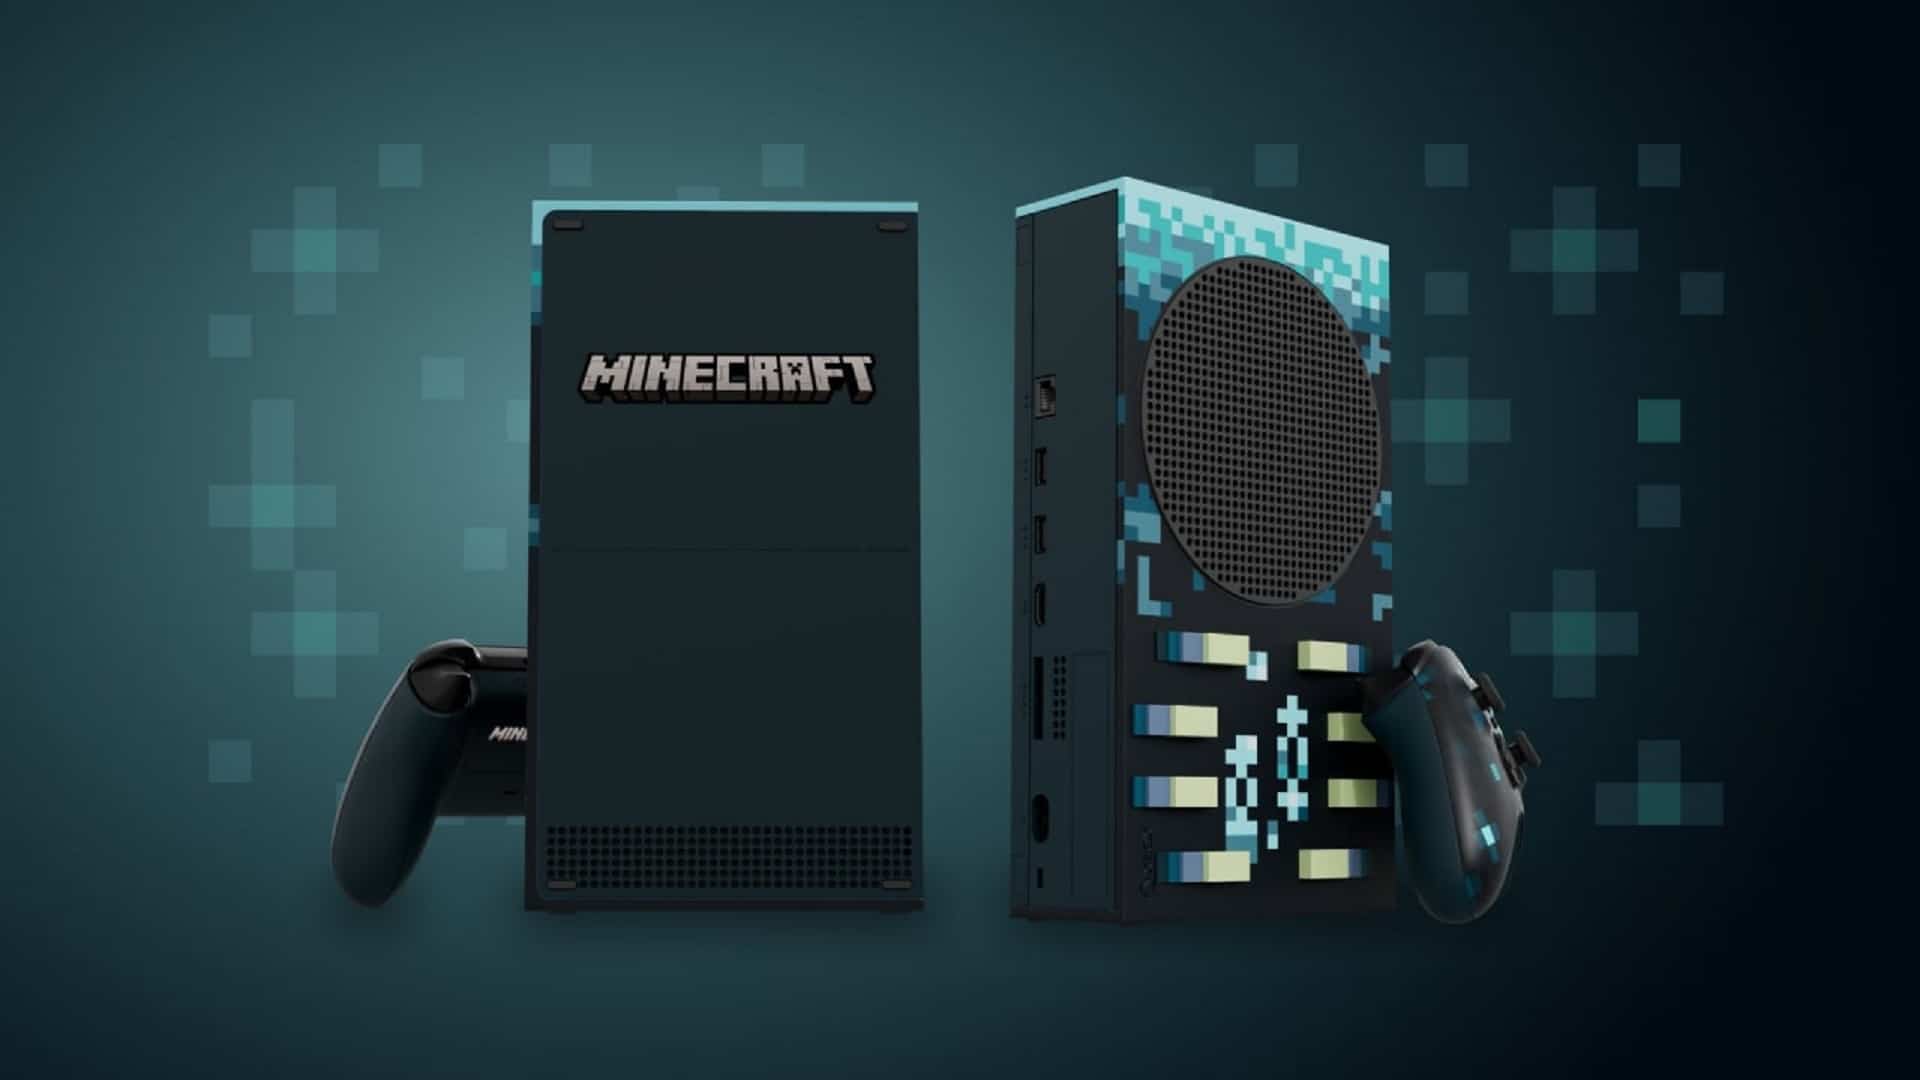 Xbox regala una consola de Minecraft personalizada, GamersRD